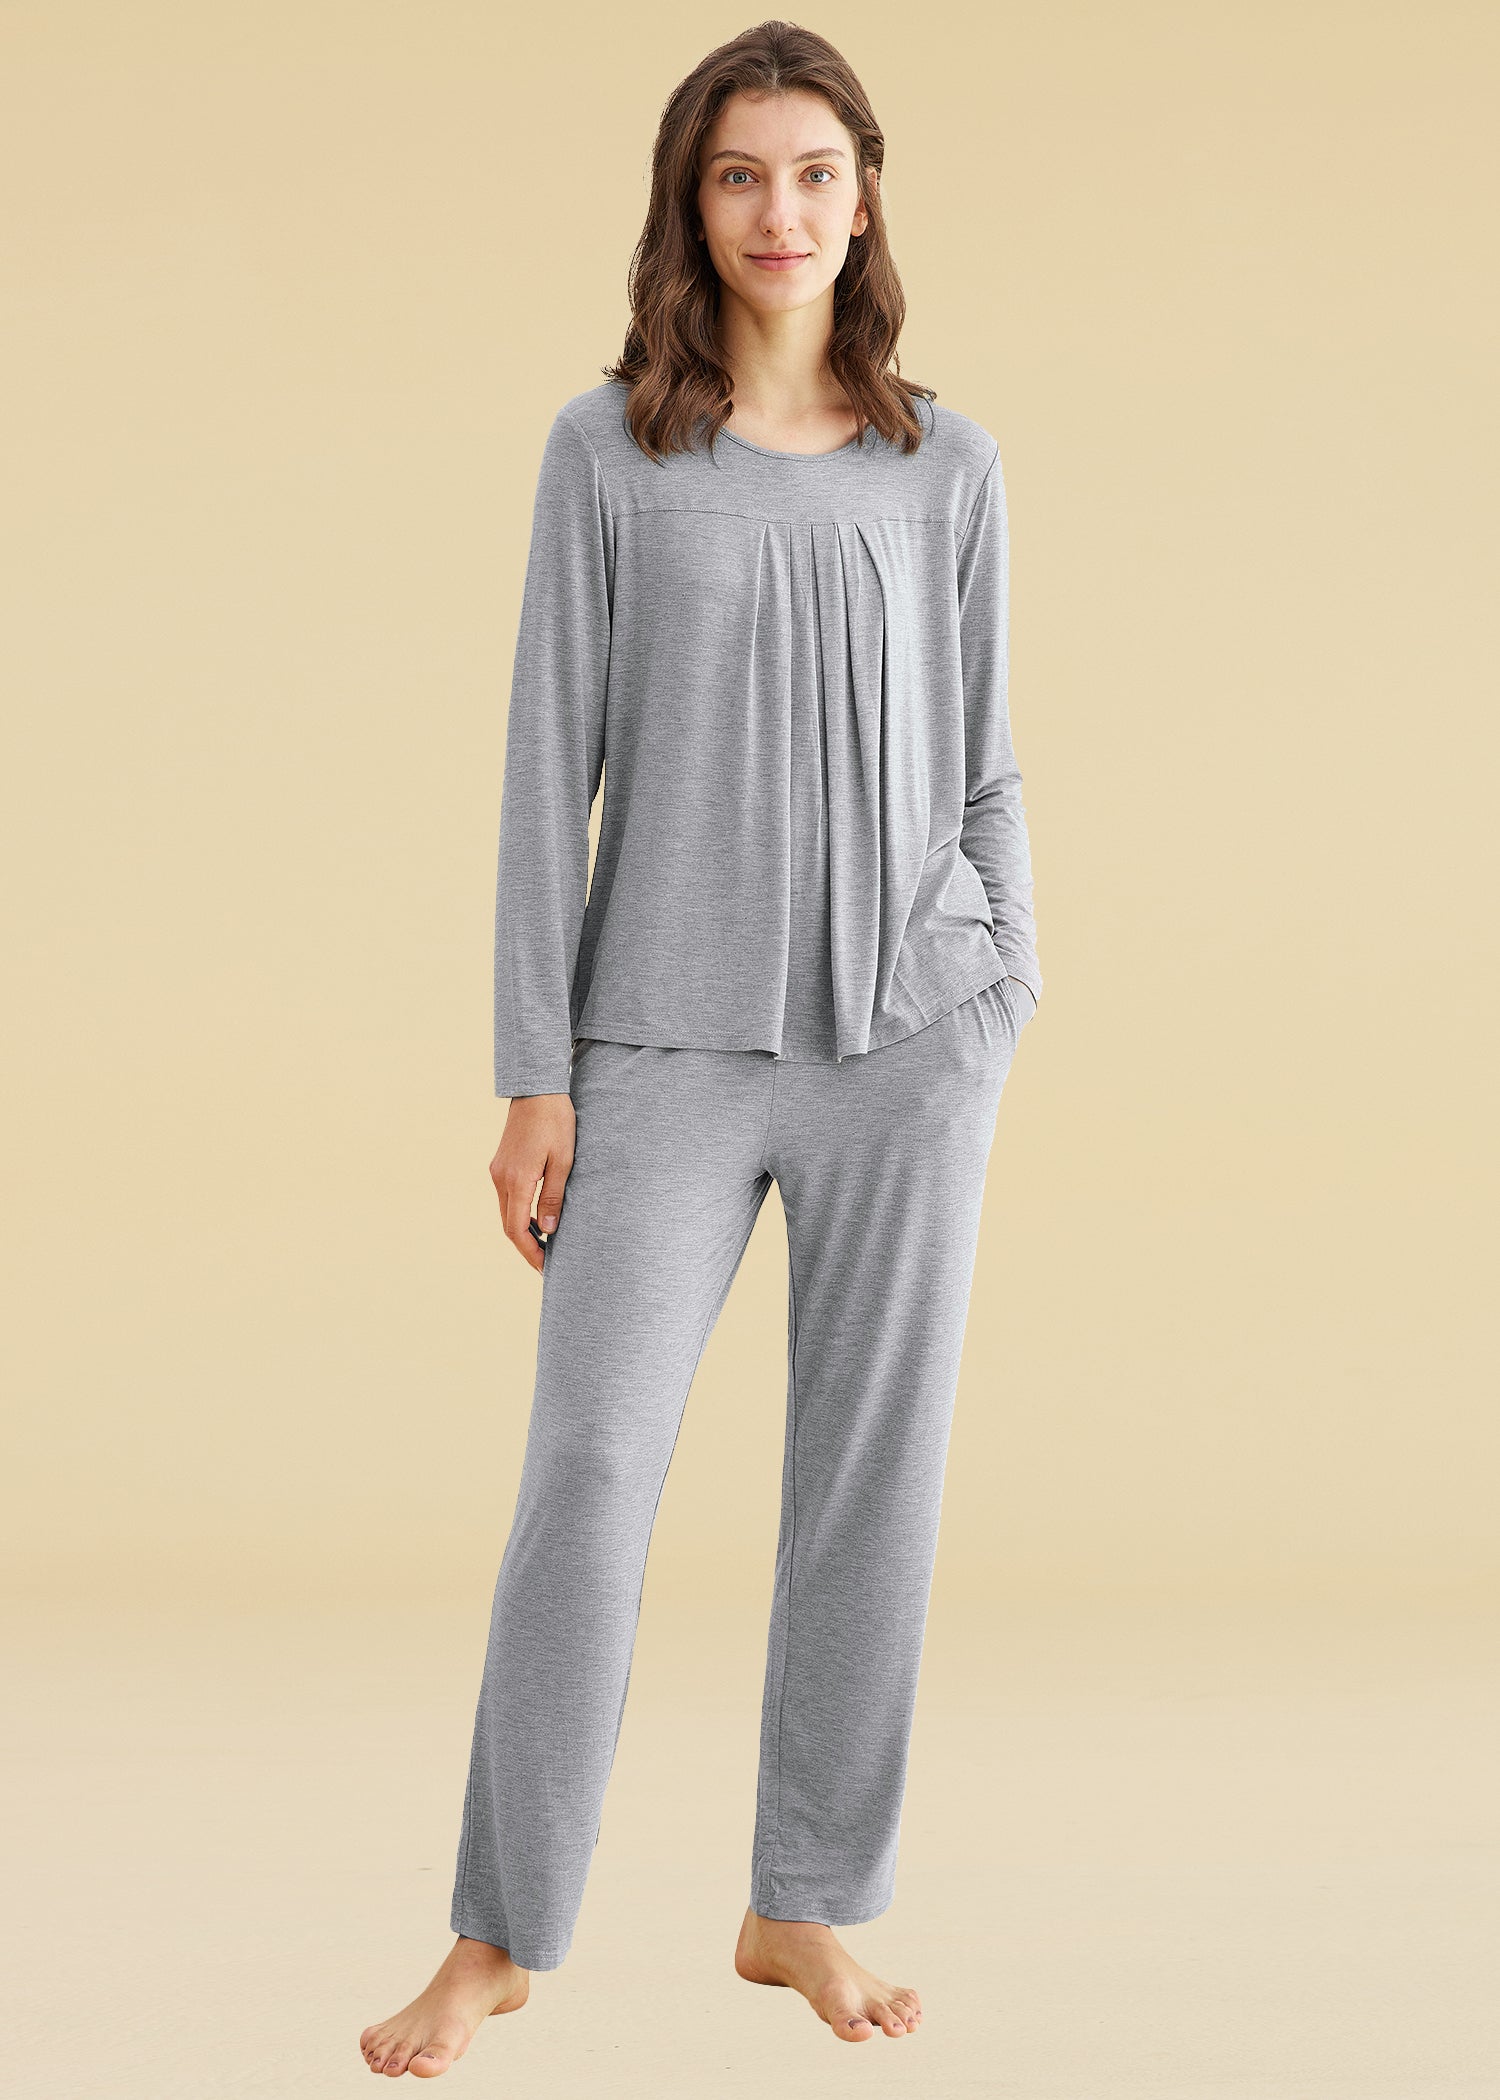 Pzuqiu Stretchy Women Pajamas Sets 2 Pack Long Sleeve Top & Pants